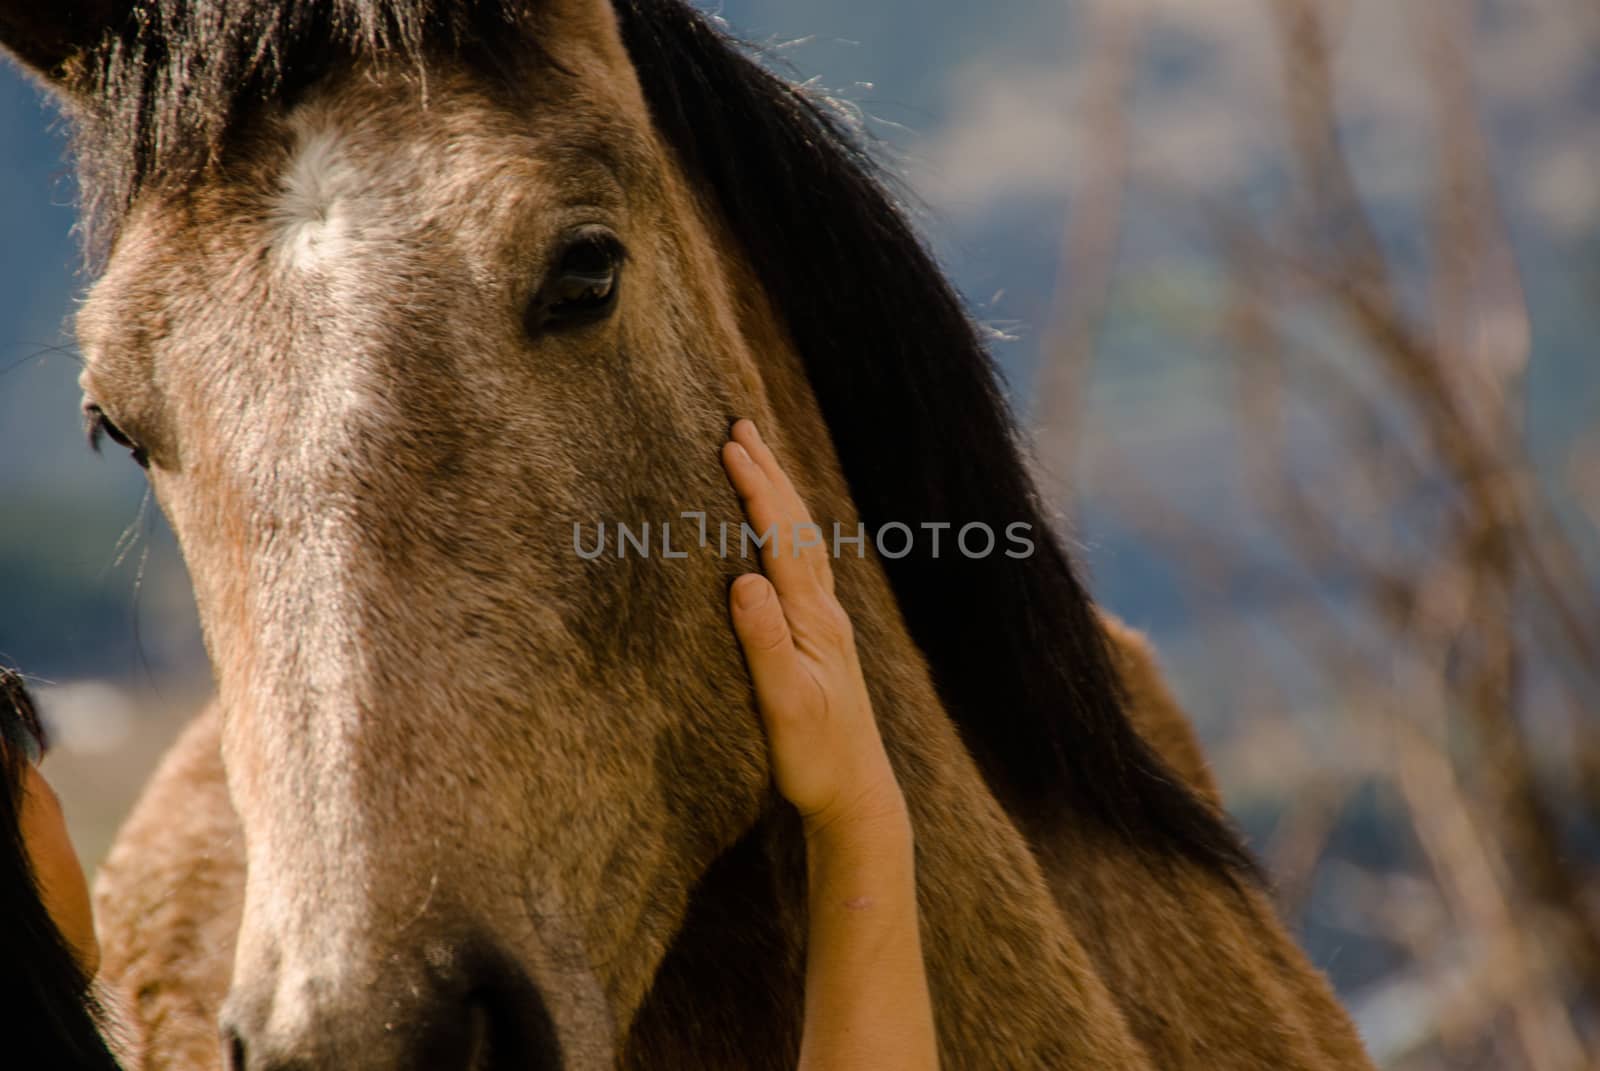 woman caressing horse cheeck by Joanastockfoto